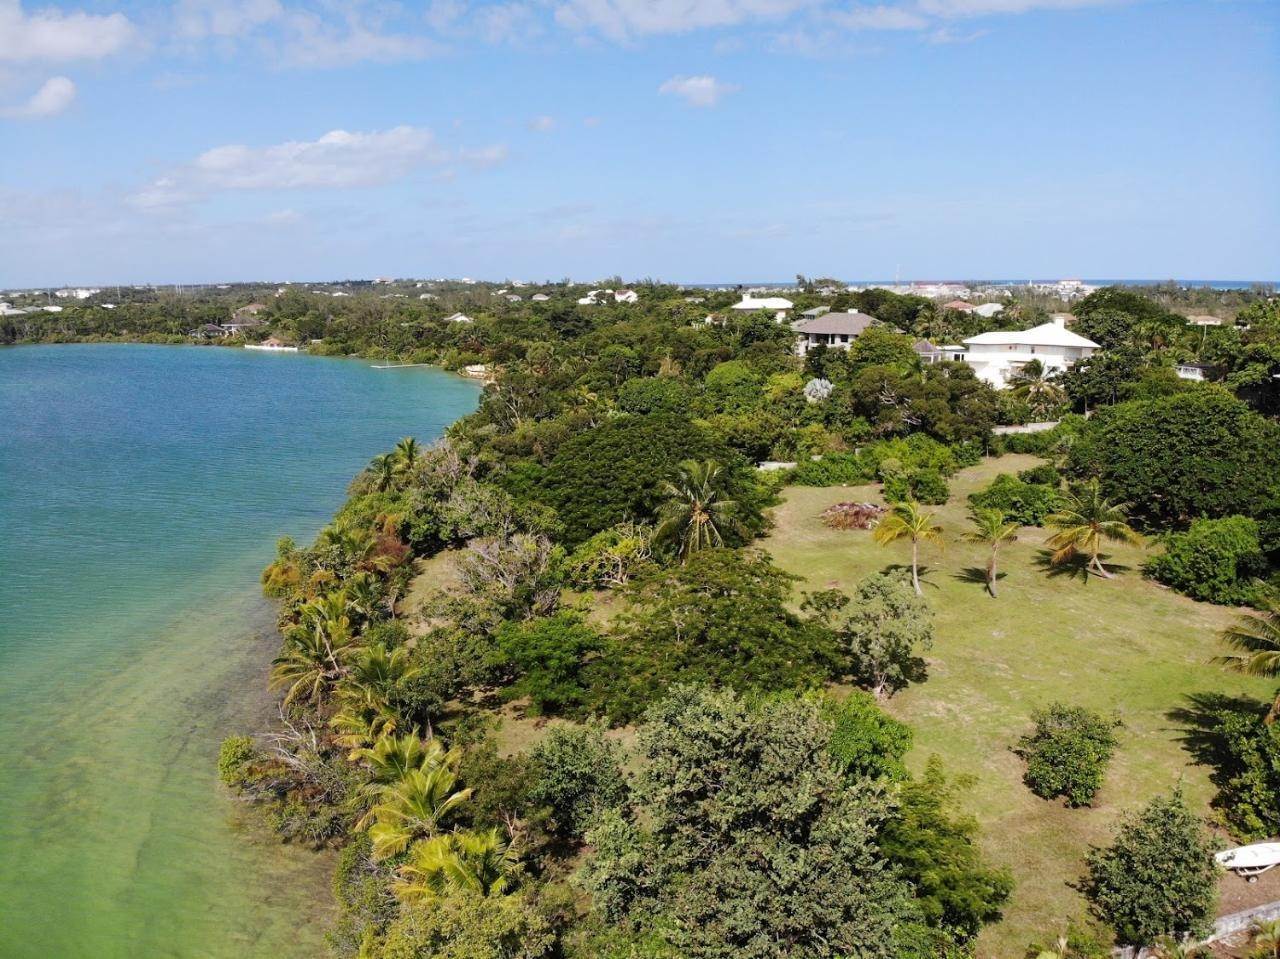 4. Lots / Acreage for Sale at Cable Beach, Nassau and Paradise Island, Bahamas